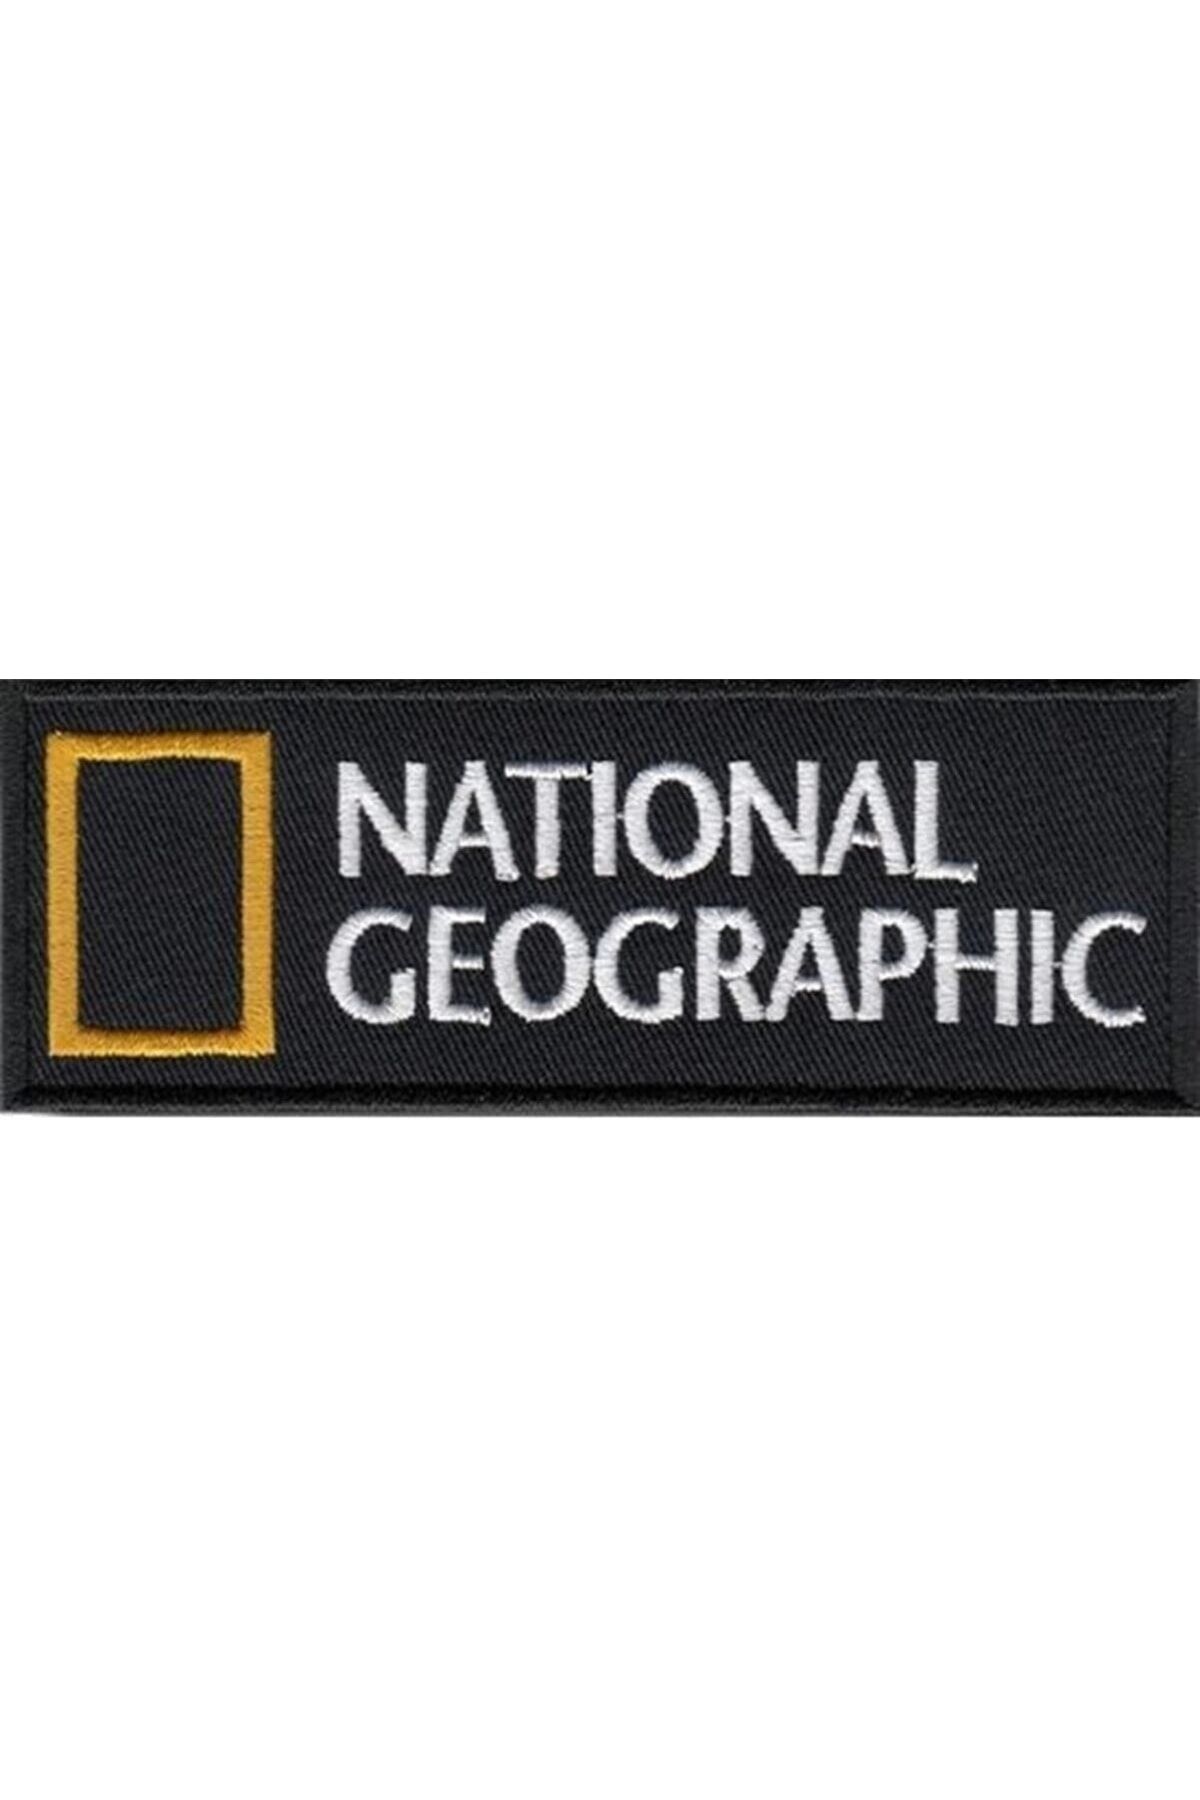 Sim Nakış Cırt Bantlı National Geographic Nakış Işleme Patch Peç 8×3 Cm